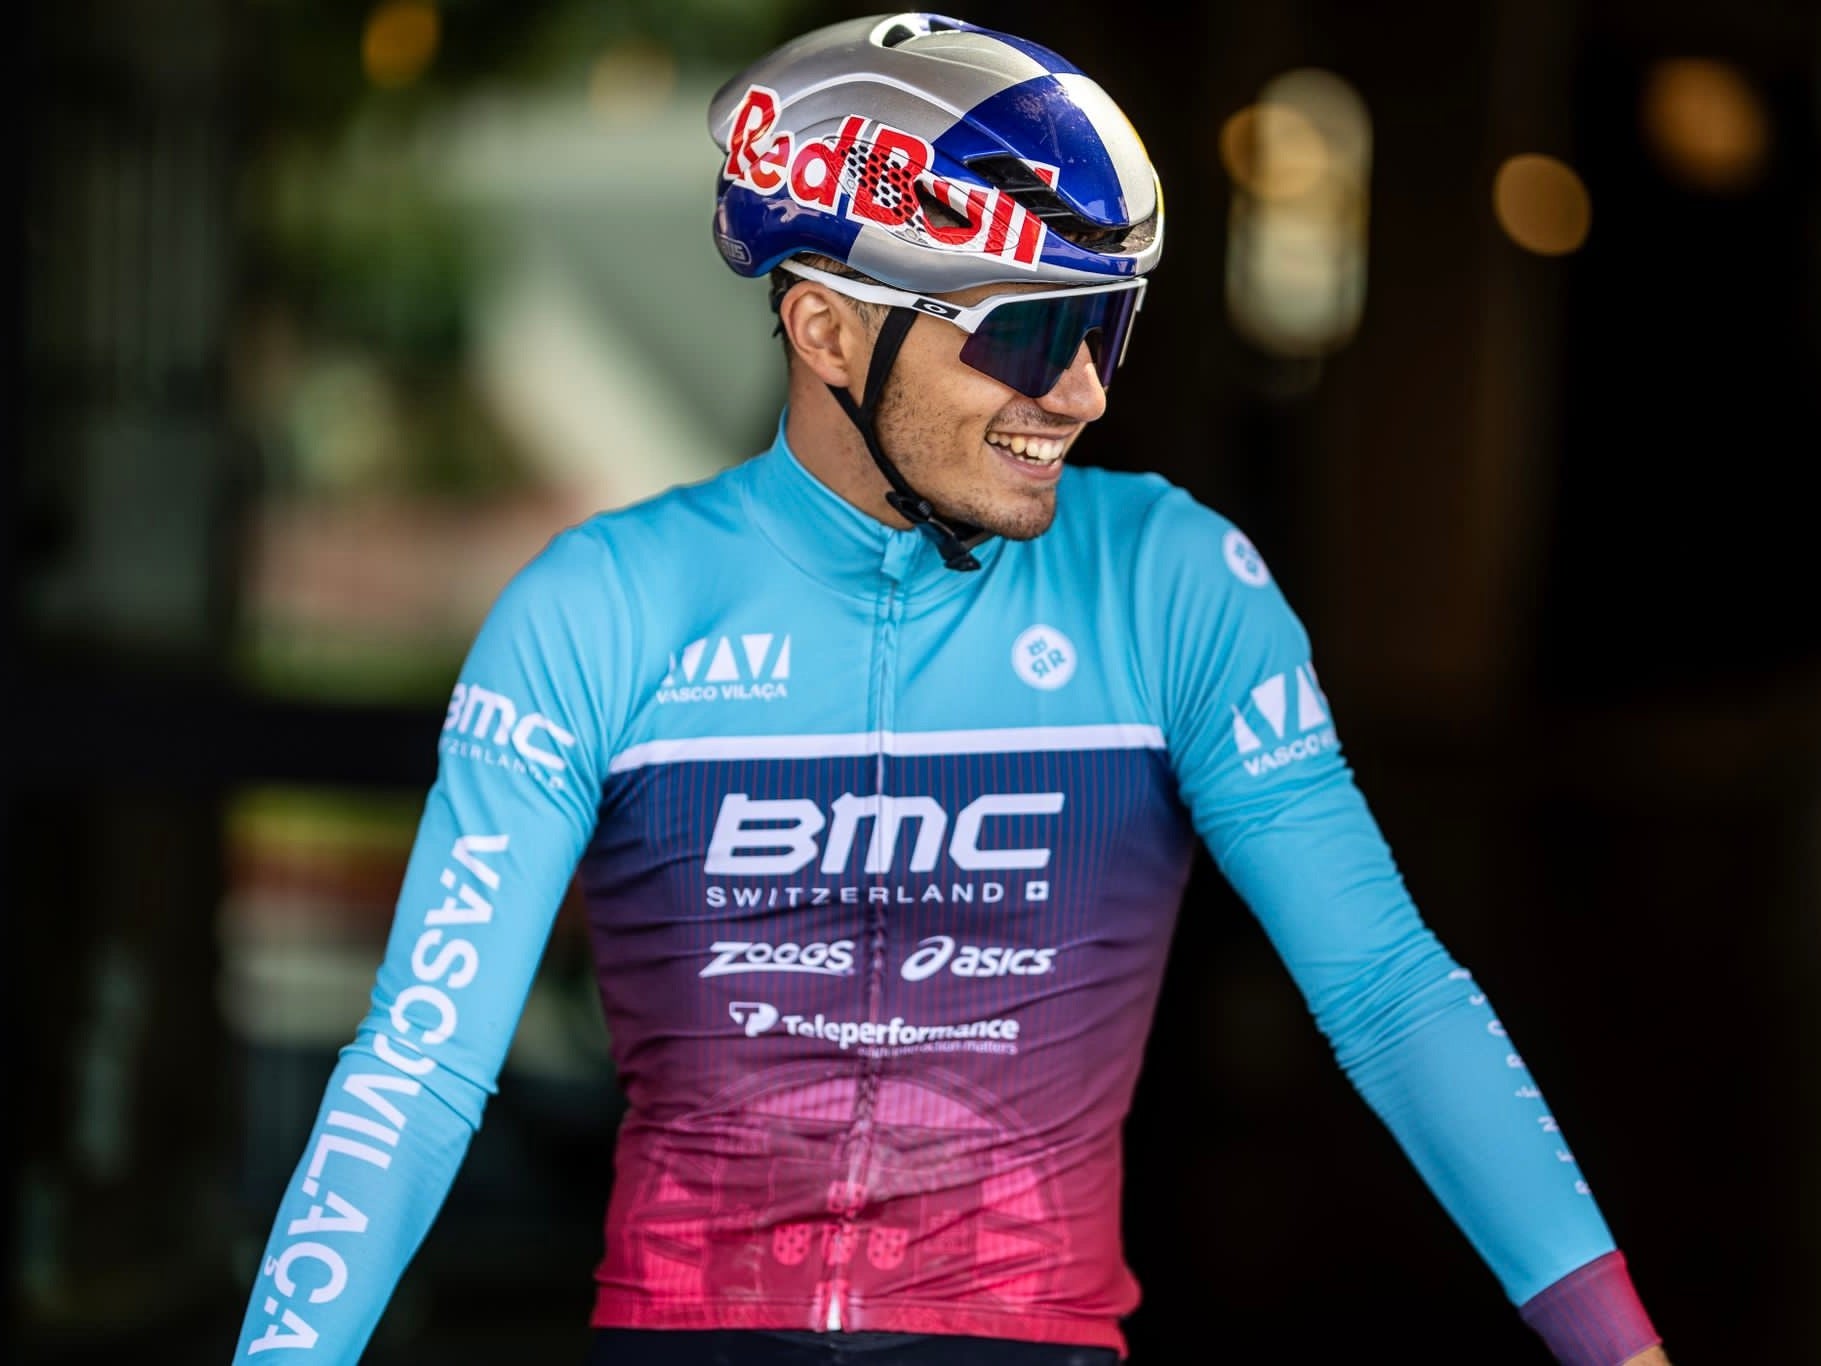 BMC | Reflecting on off-season with BMC’s triathletes